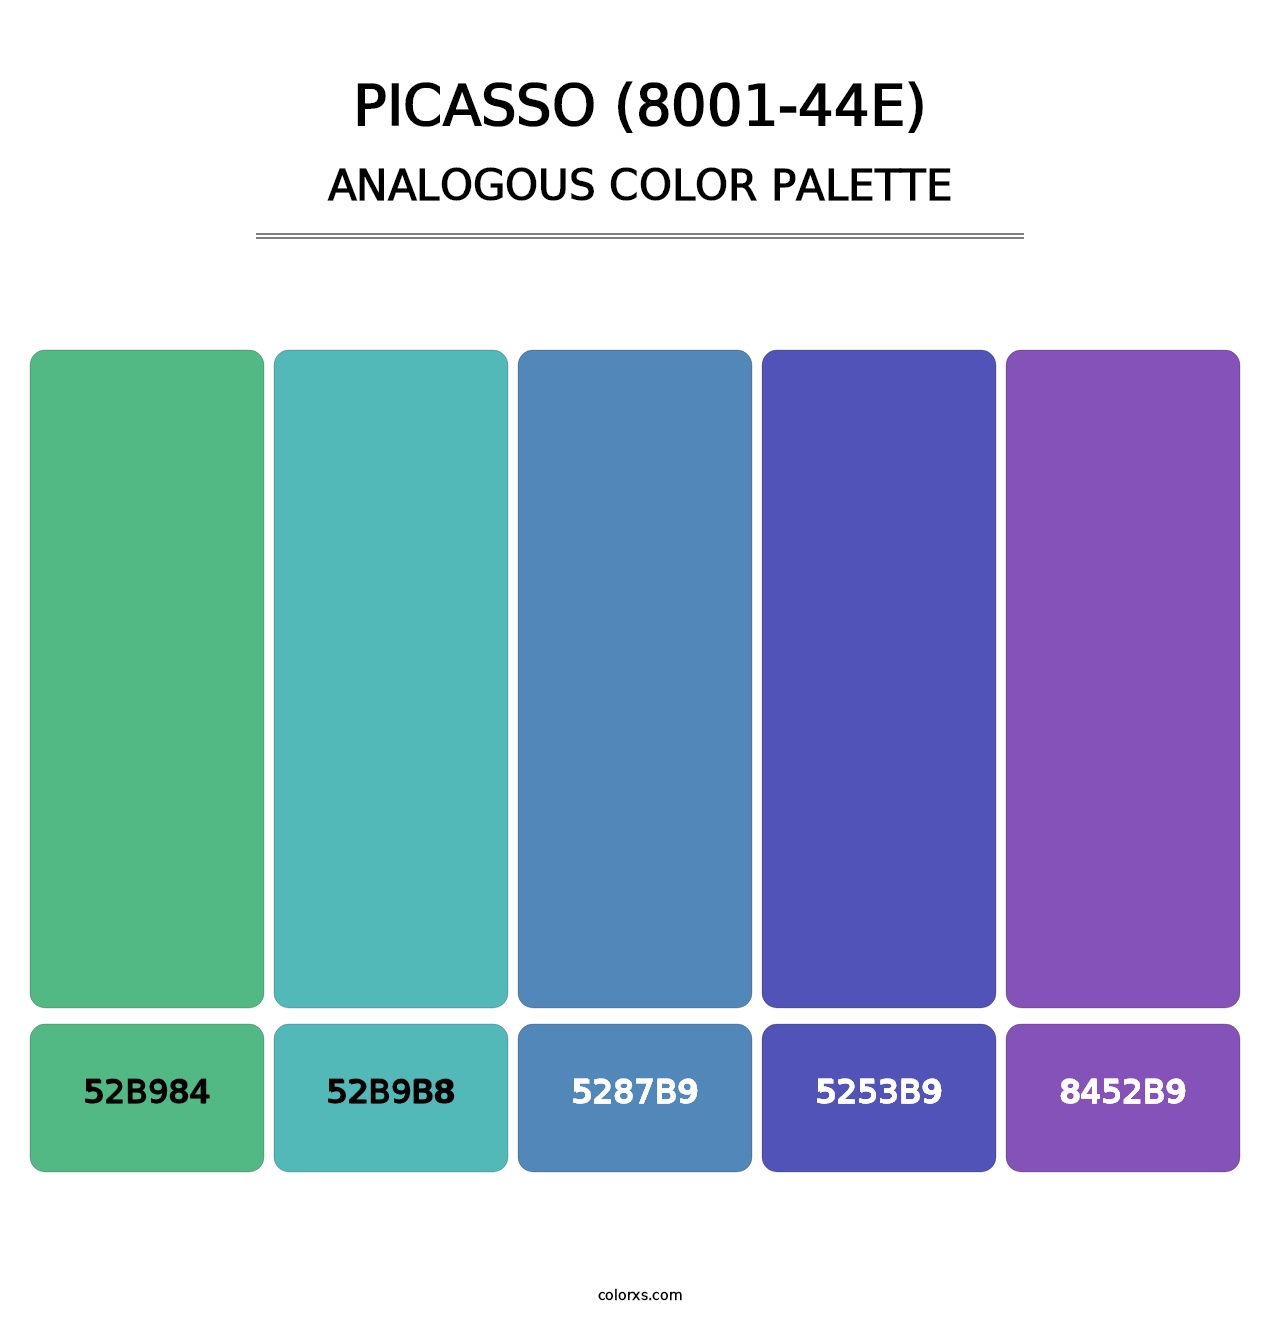 Picasso (8001-44E) - Analogous Color Palette